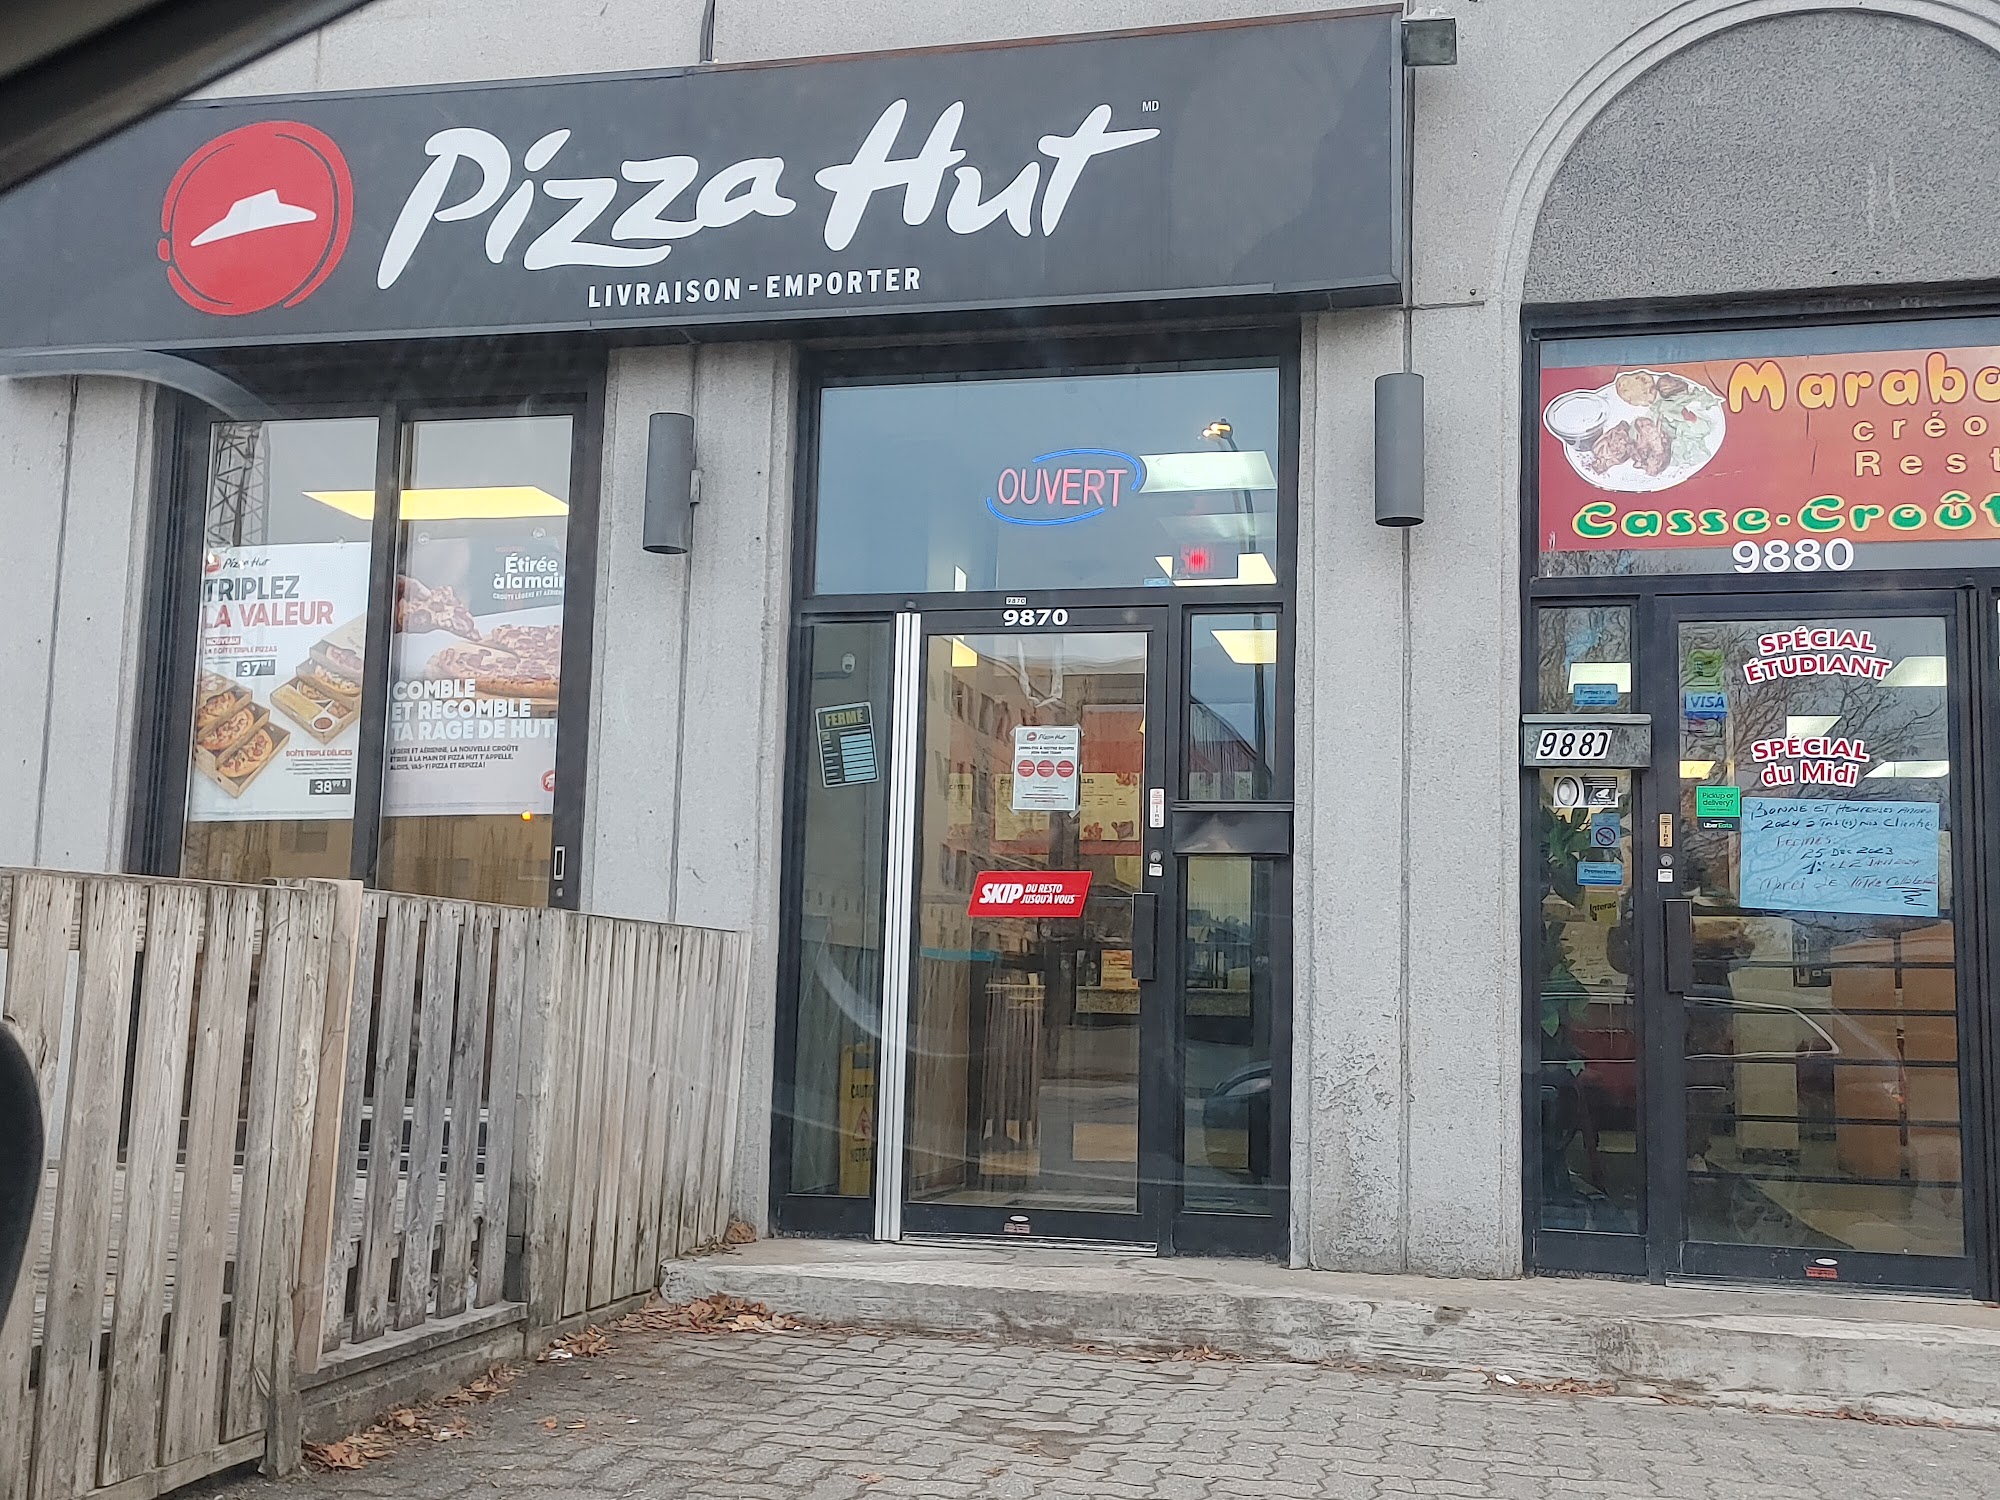 Pizza Hut Montreal